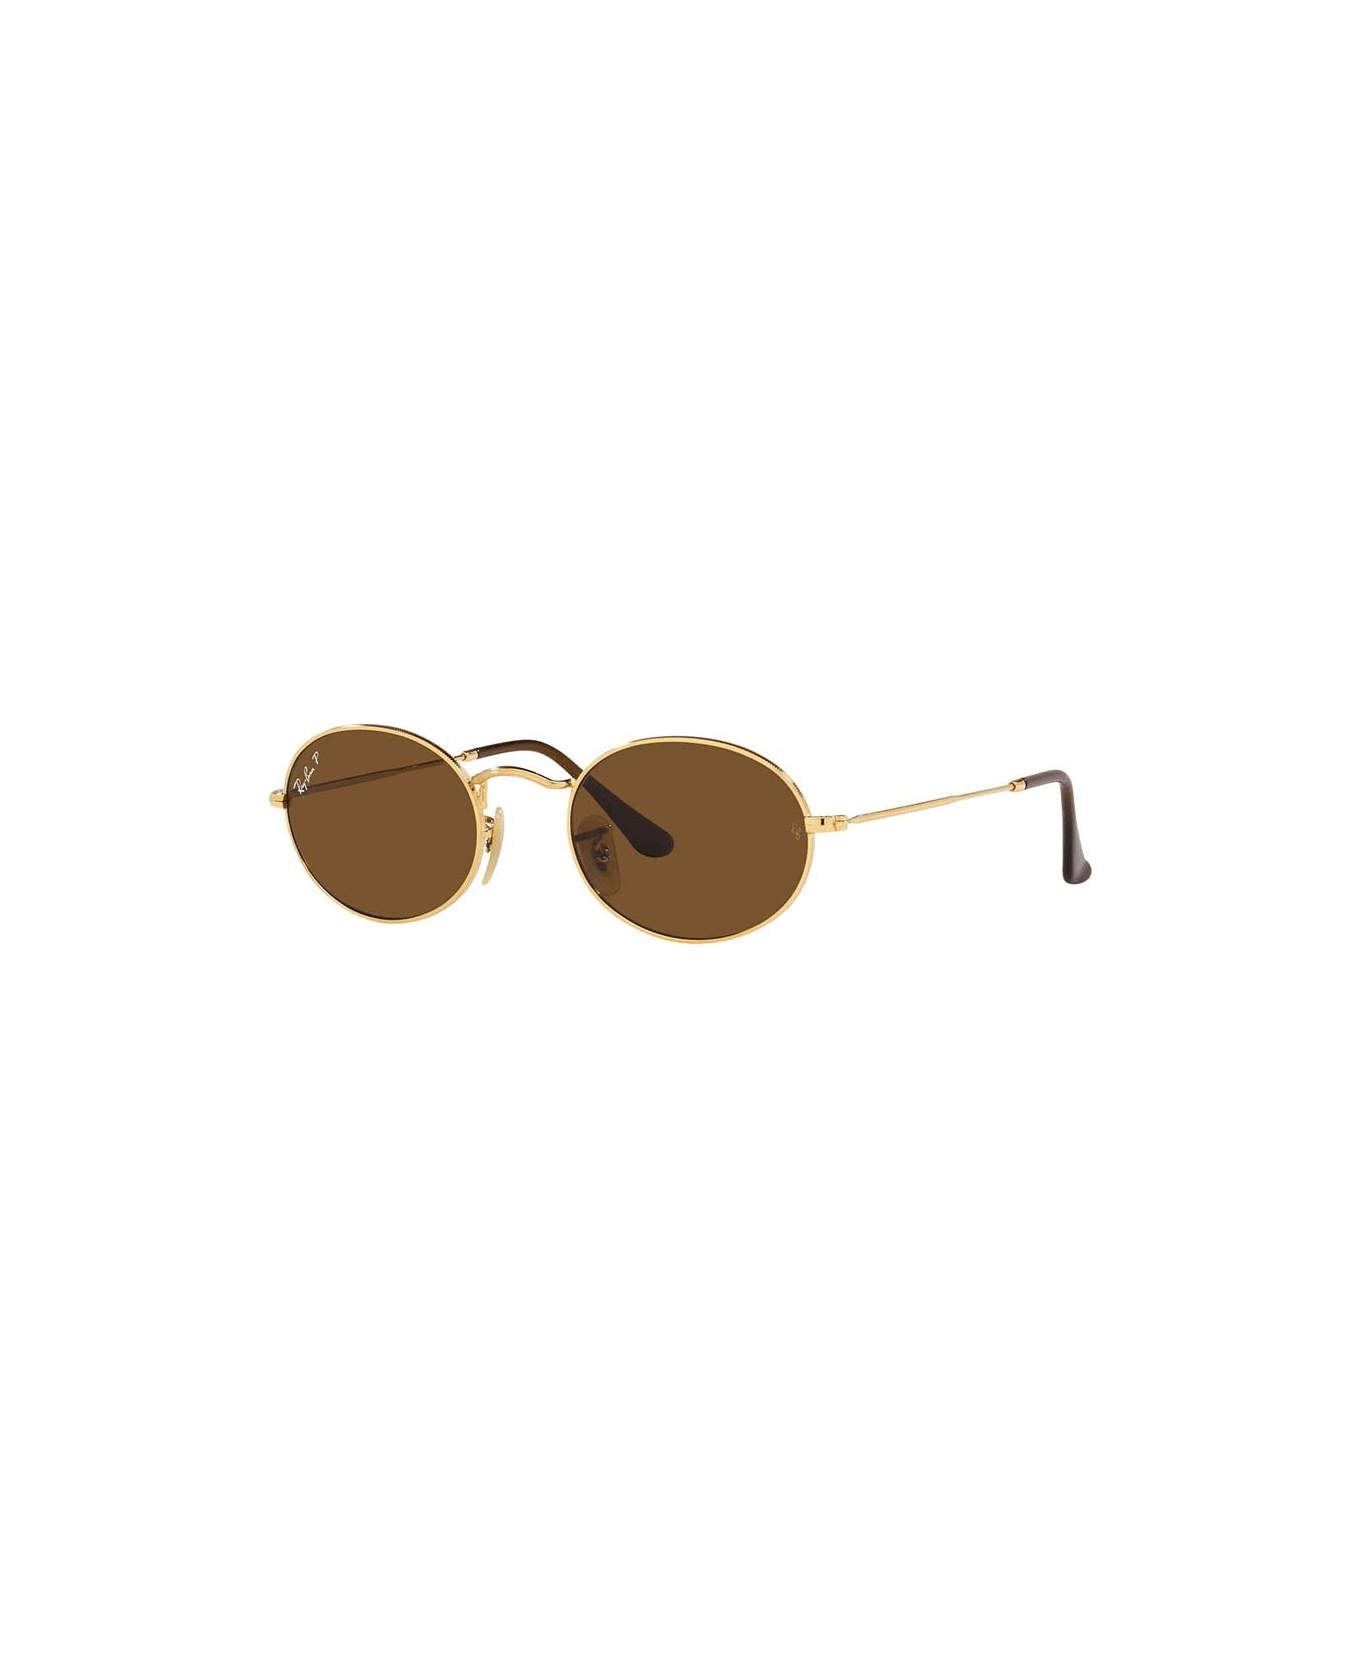 Ray-Ban Sunglasses - Oro/Marrone サングラス